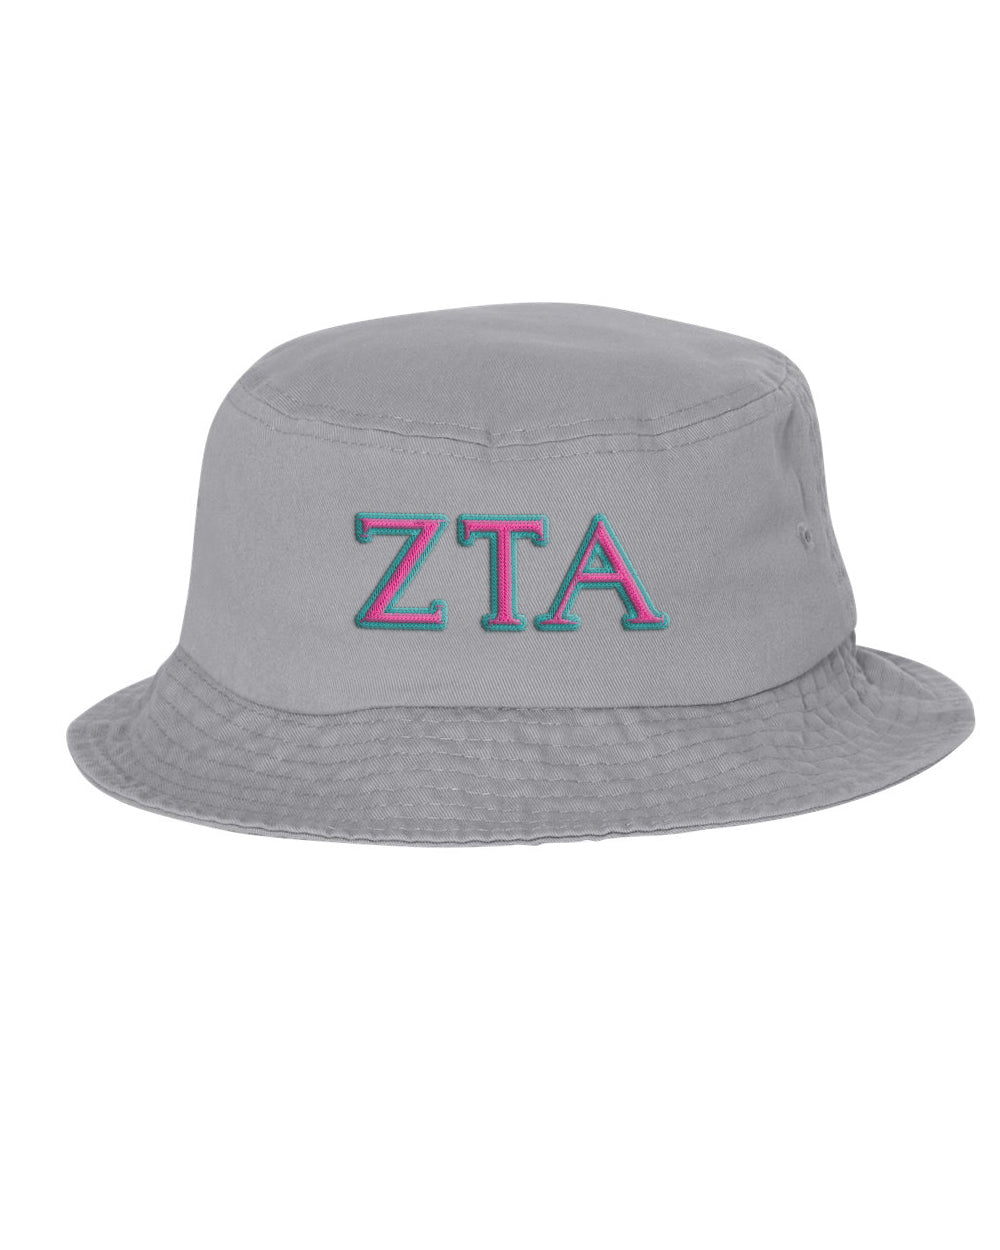 Zeta Tau Alpha Embroidered Bucket Hat